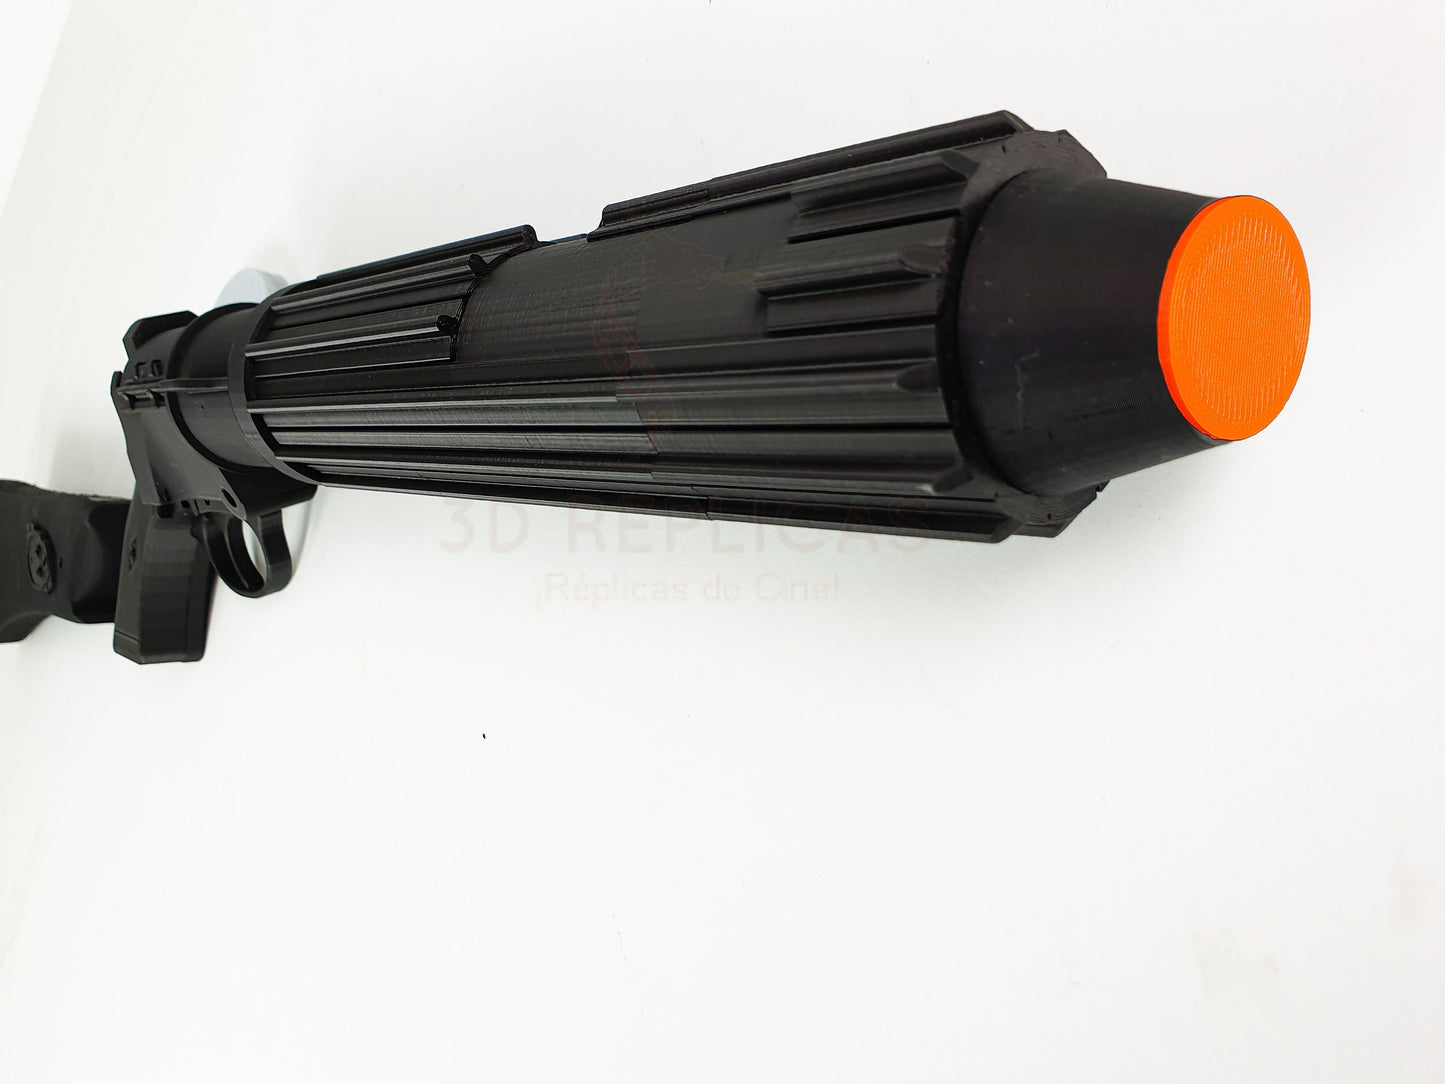 Star Wars EE-3 Boba Fett Carbine Rifle Prop Replica Blaster Cosplay Gun Mandalorian RoJ